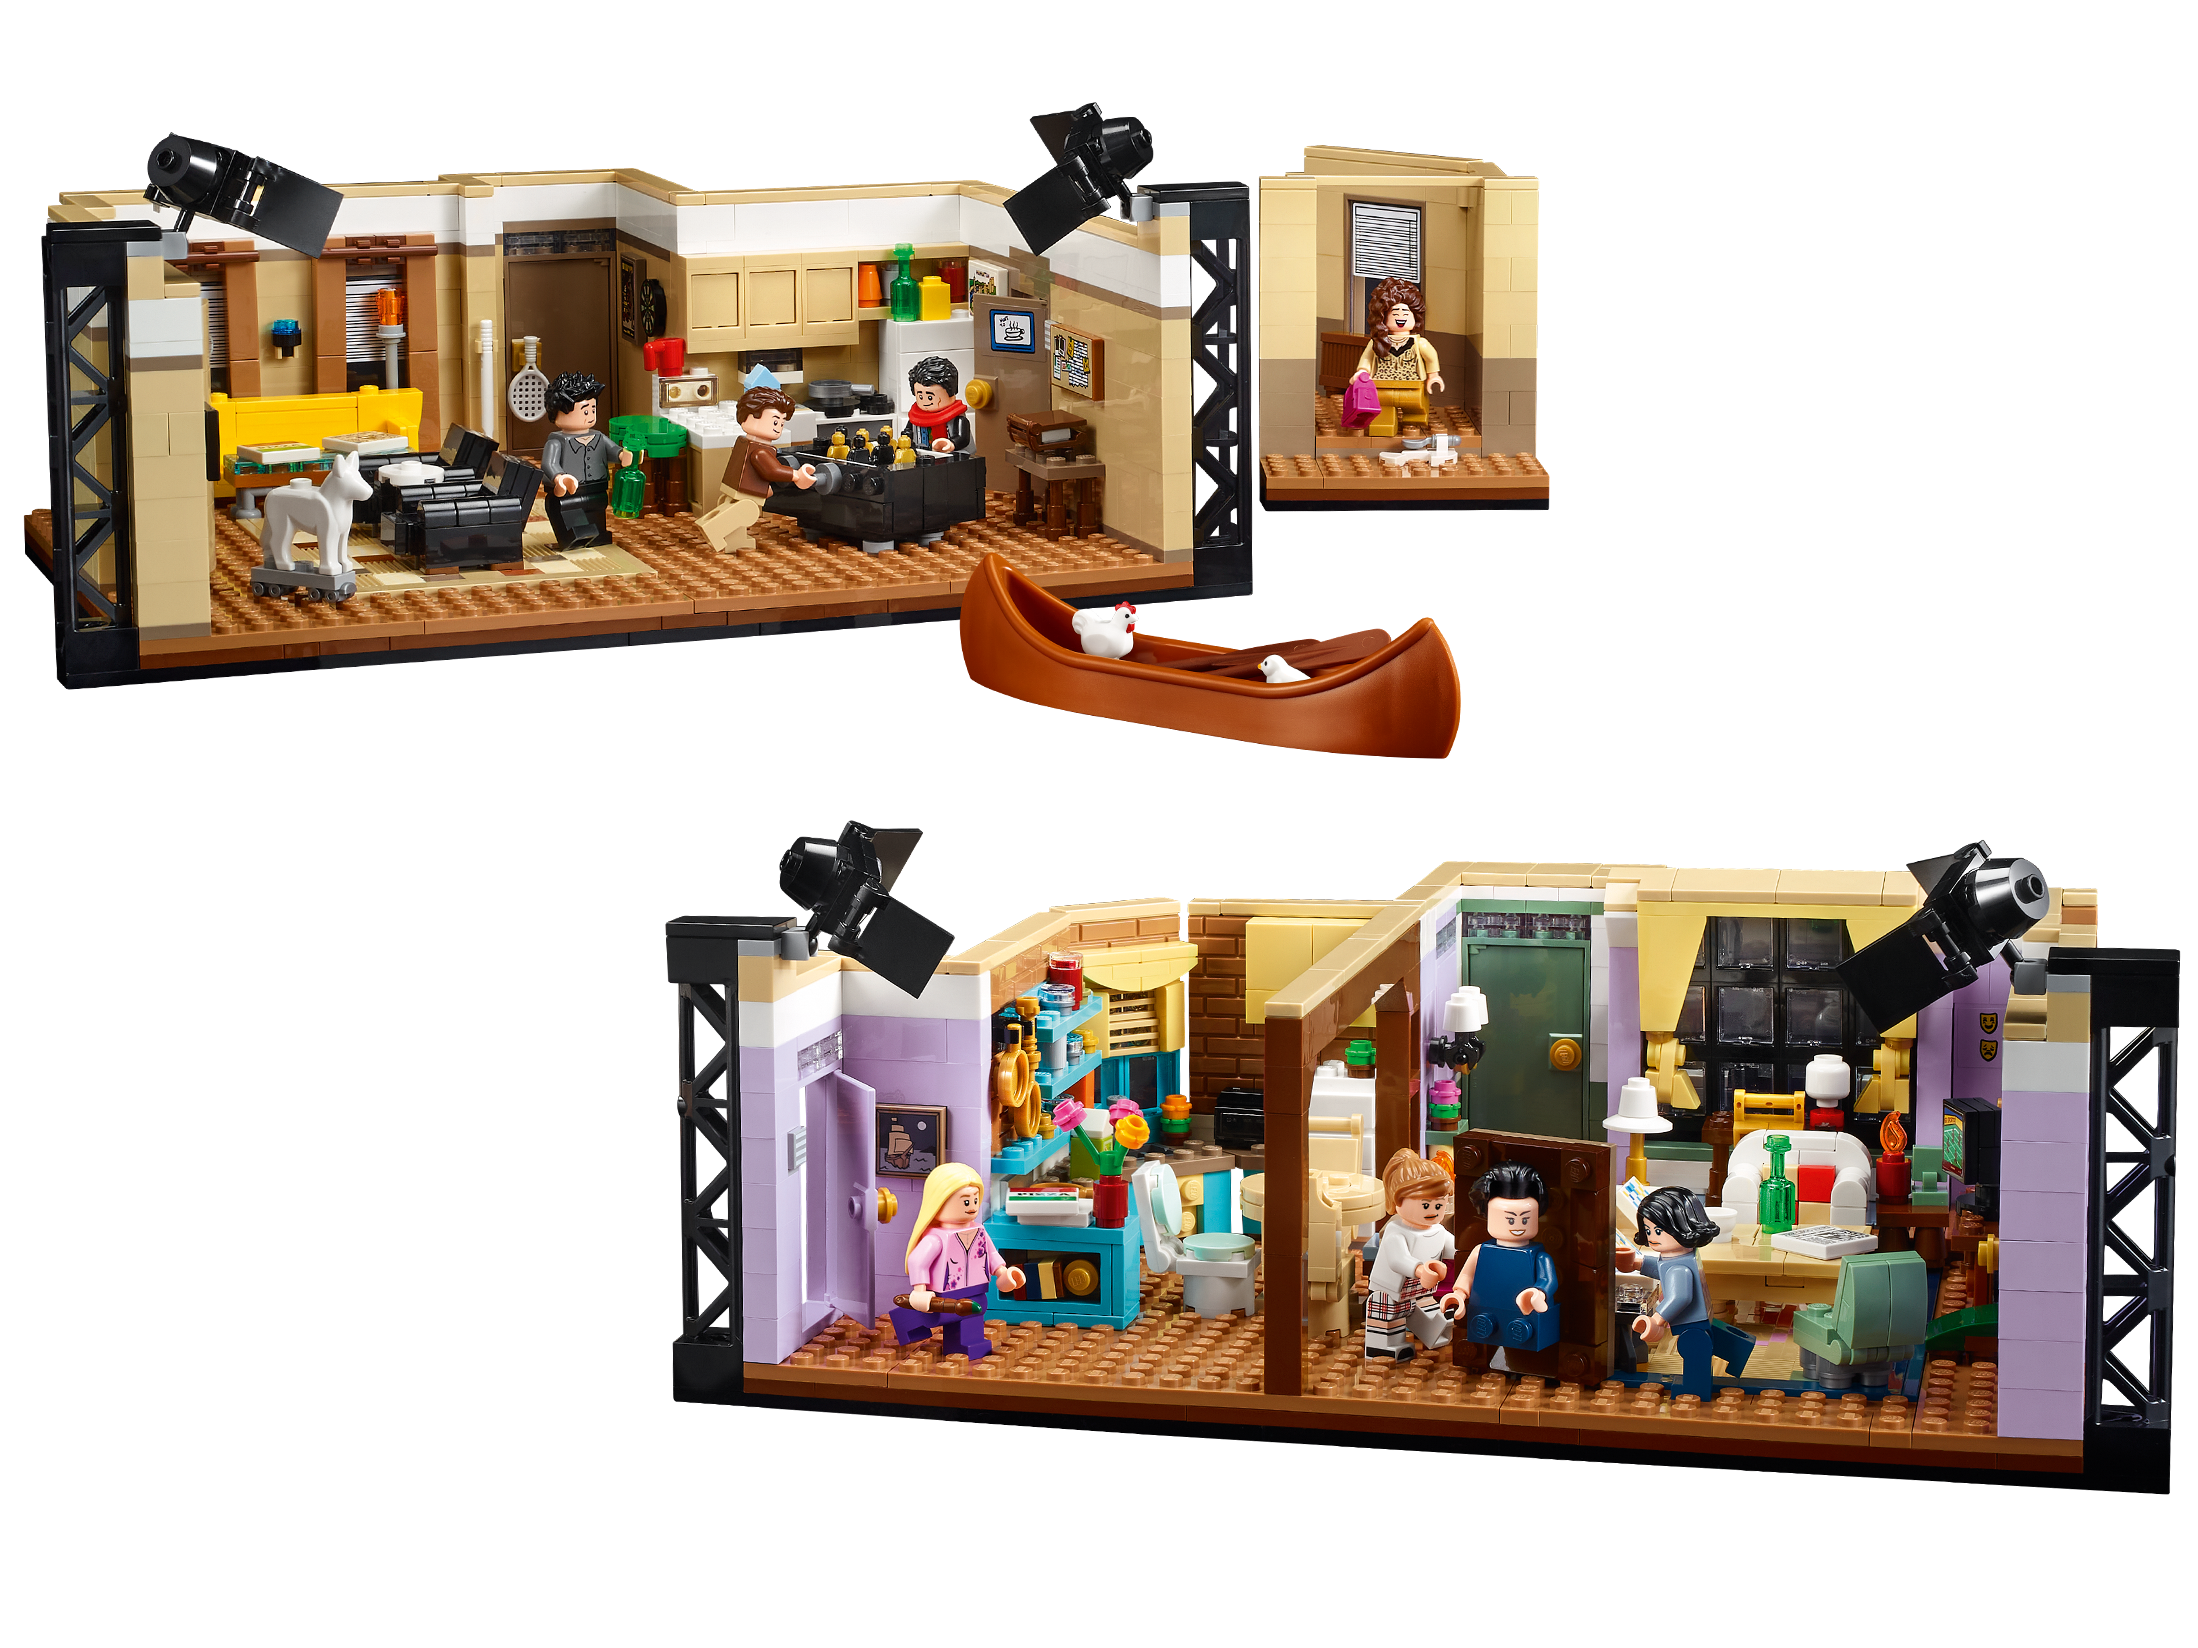 AU Seller LEGO  Friends TV Series BNISB 10292 The Friends Apartments 